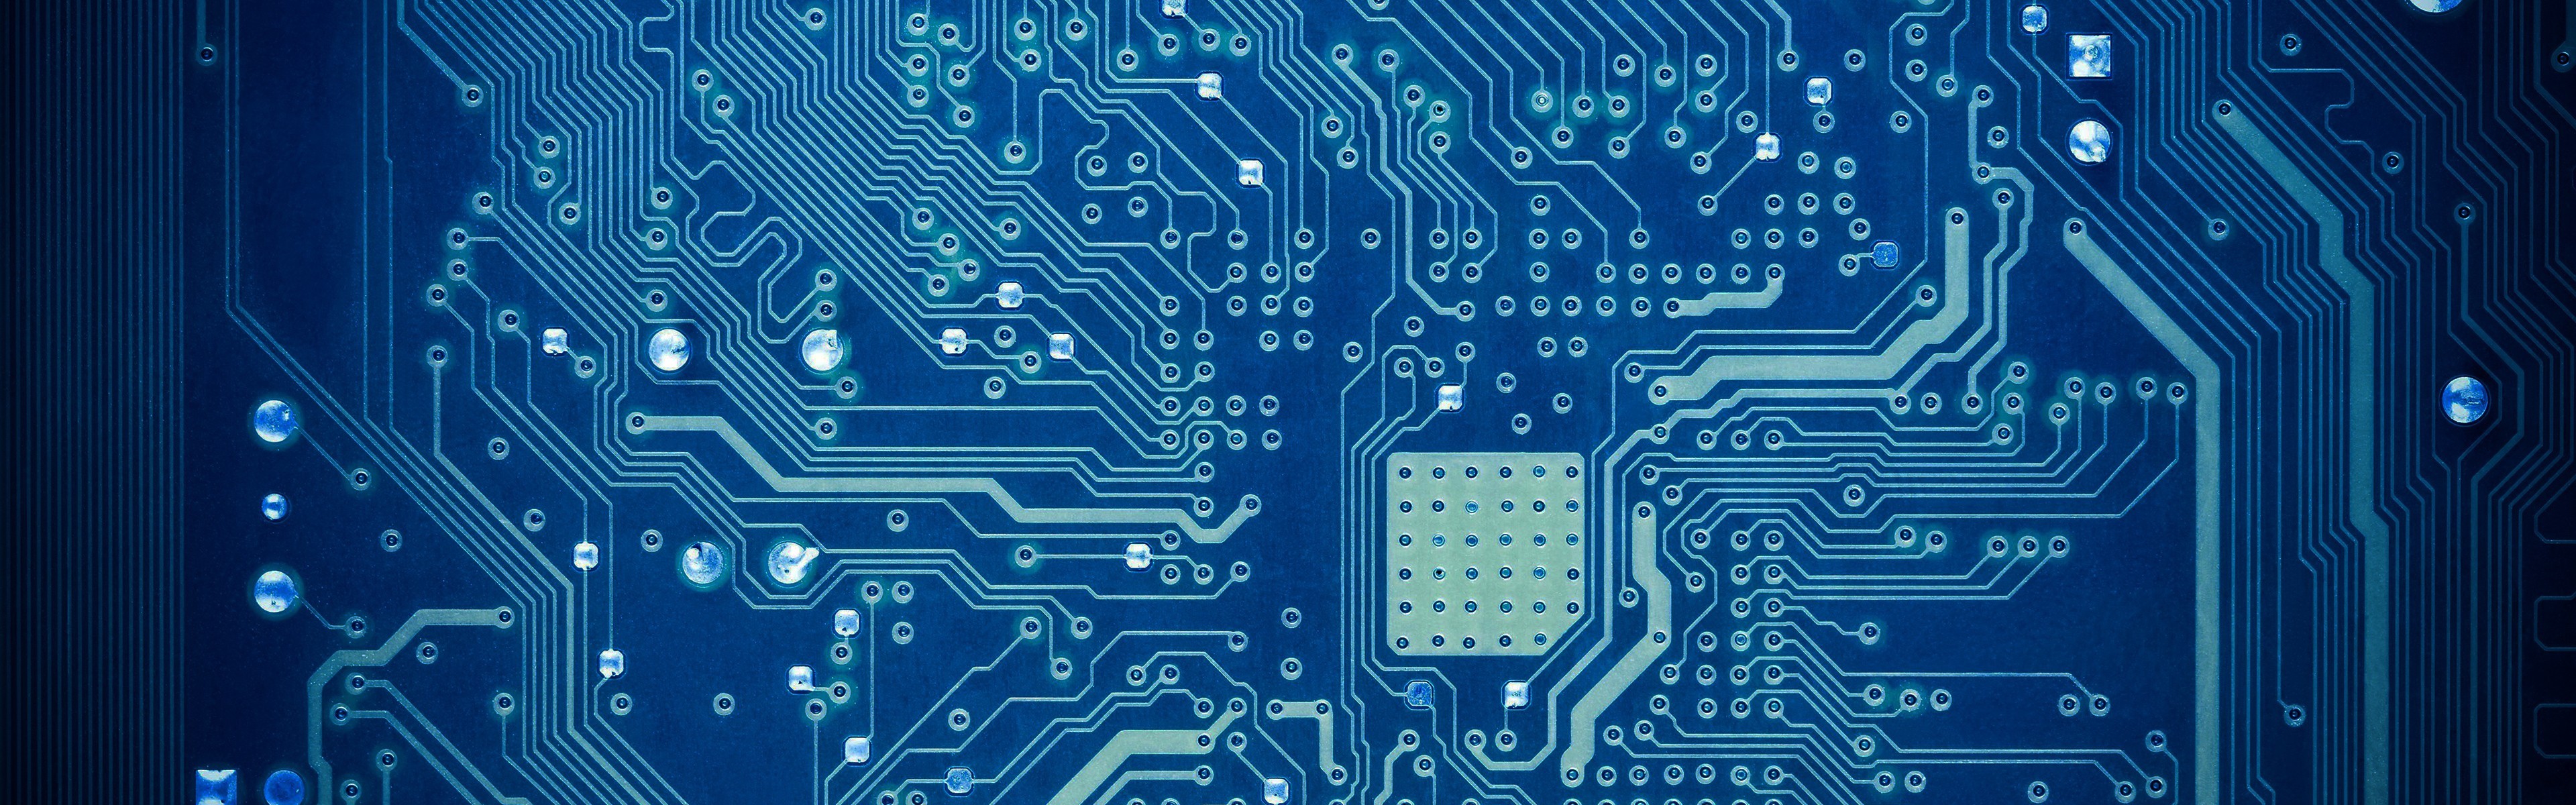 motherboard wallpaper,electronic engineering,electronics,blue,motherboard,electronic component